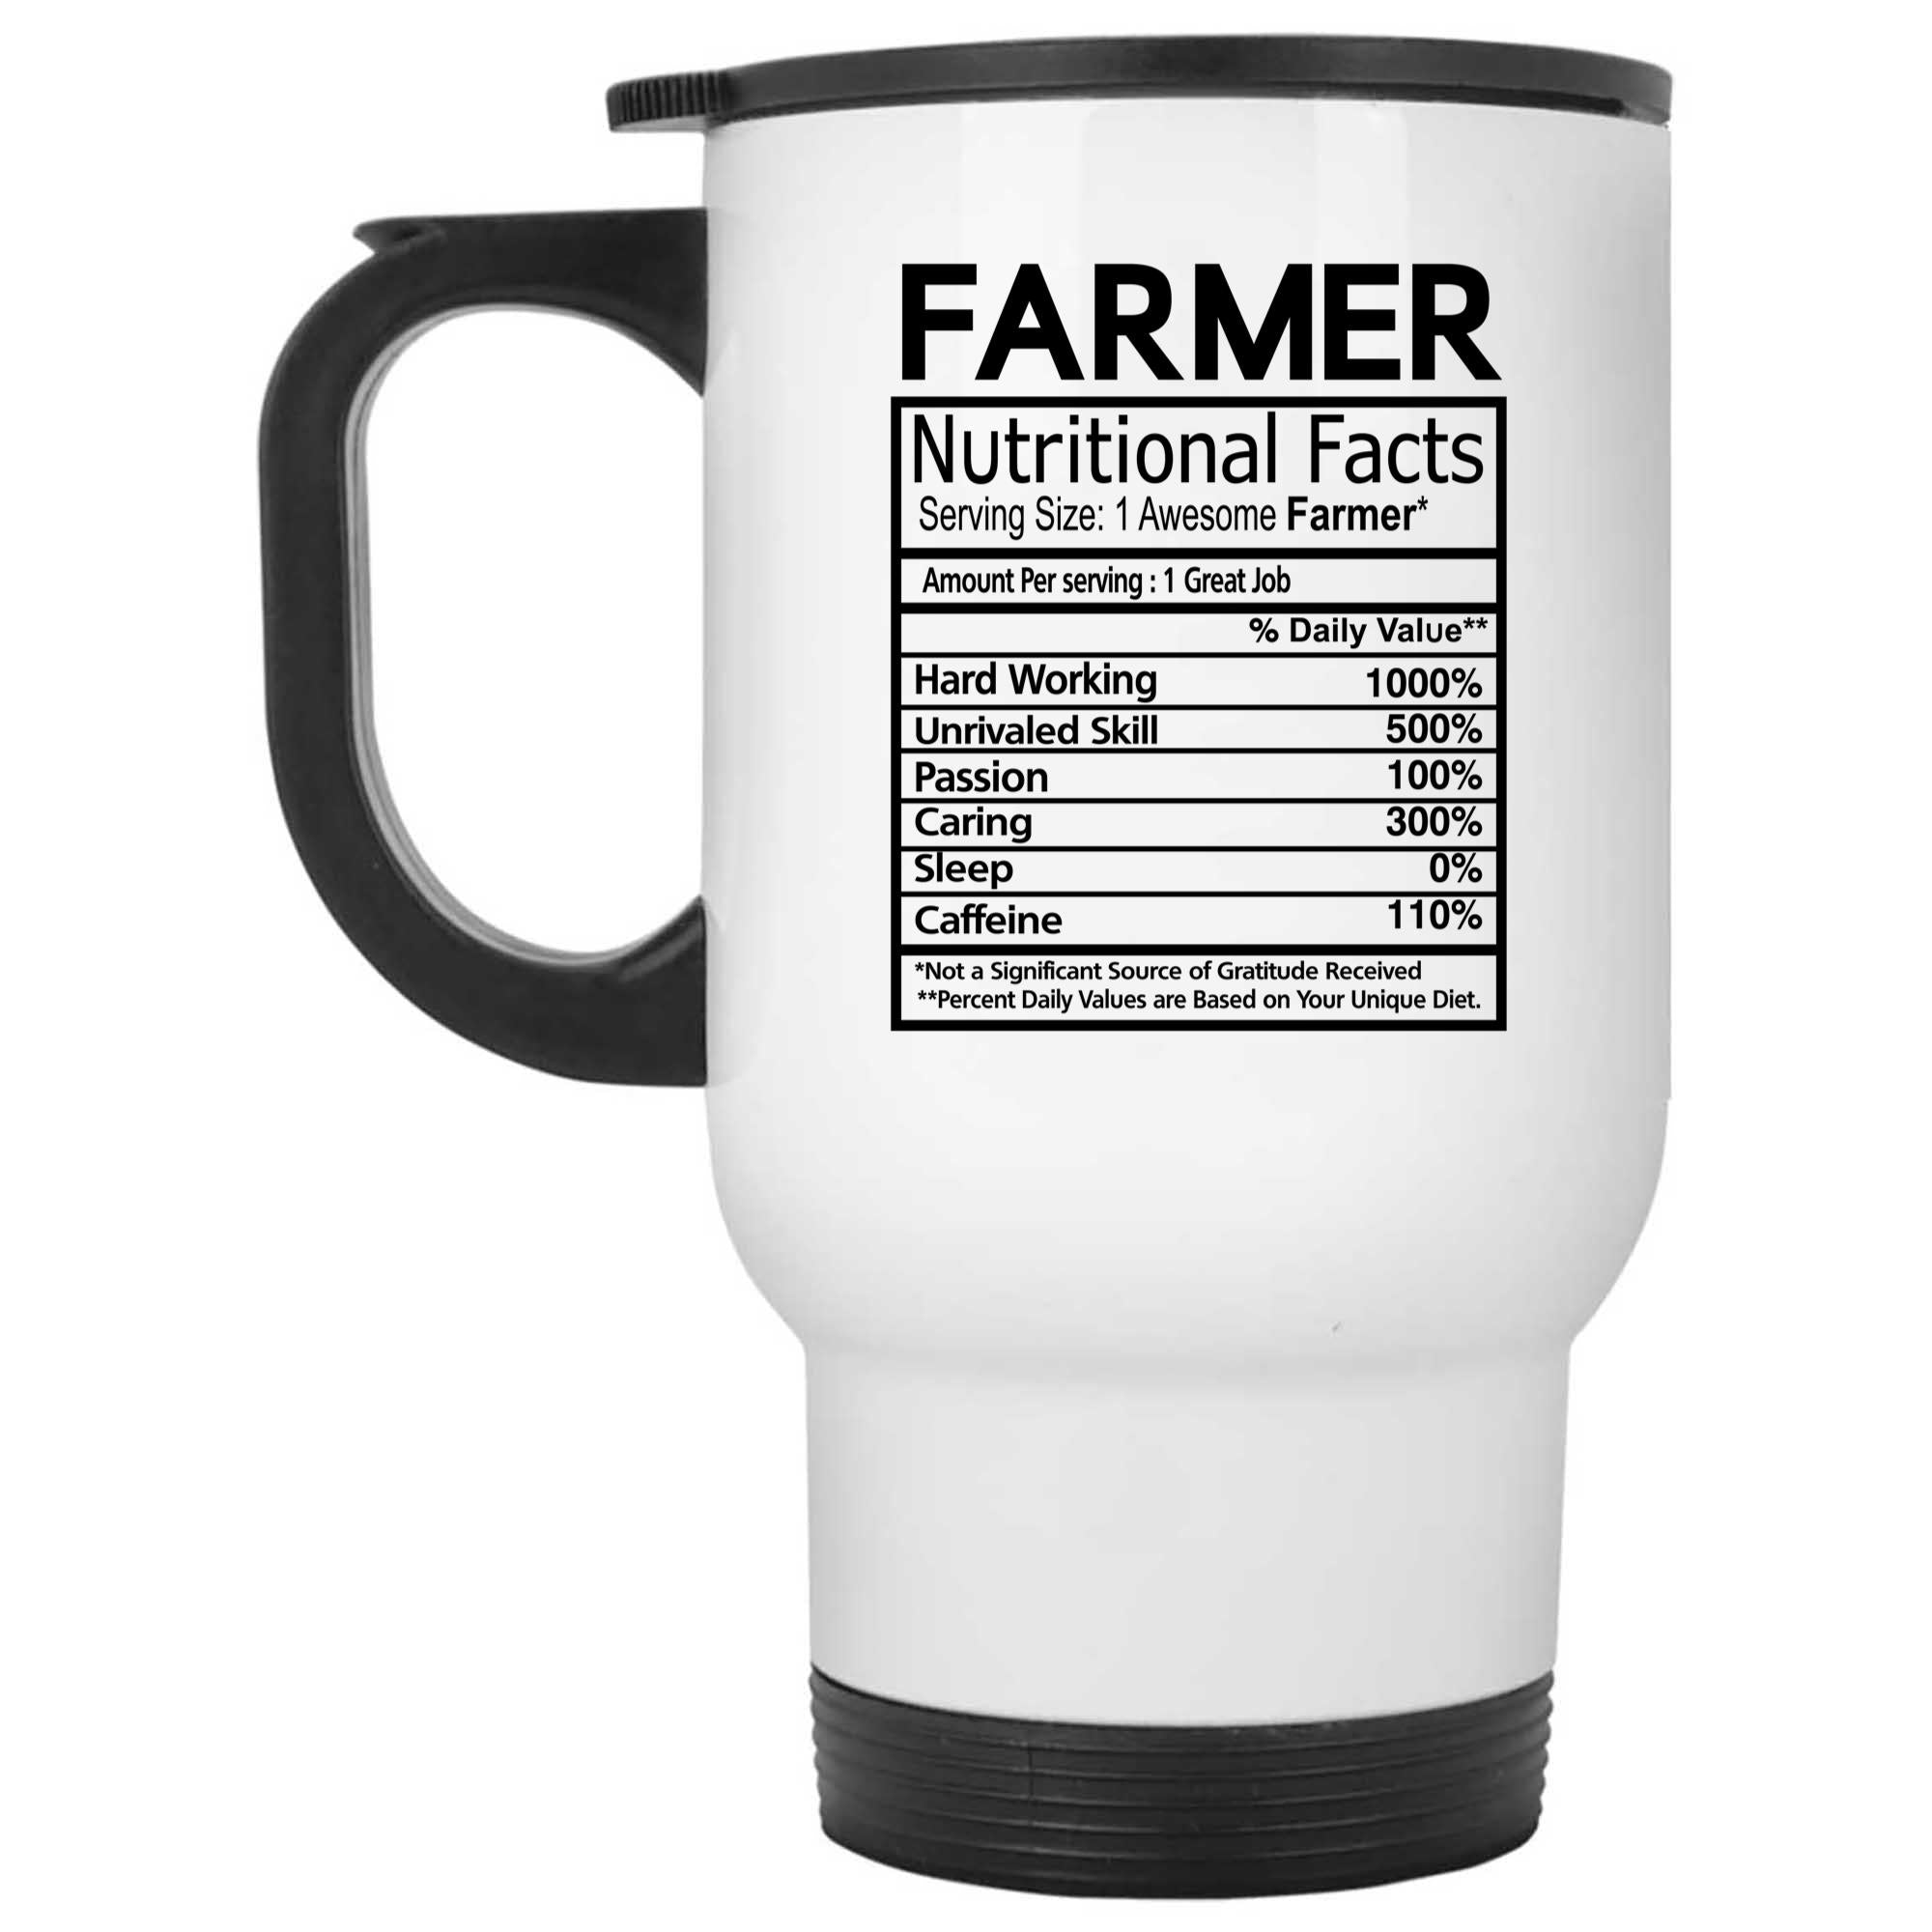 Skitongifts Funny Ceramic Novelty Coffee Mug Farmer Nutritional Facts fOOHqO6